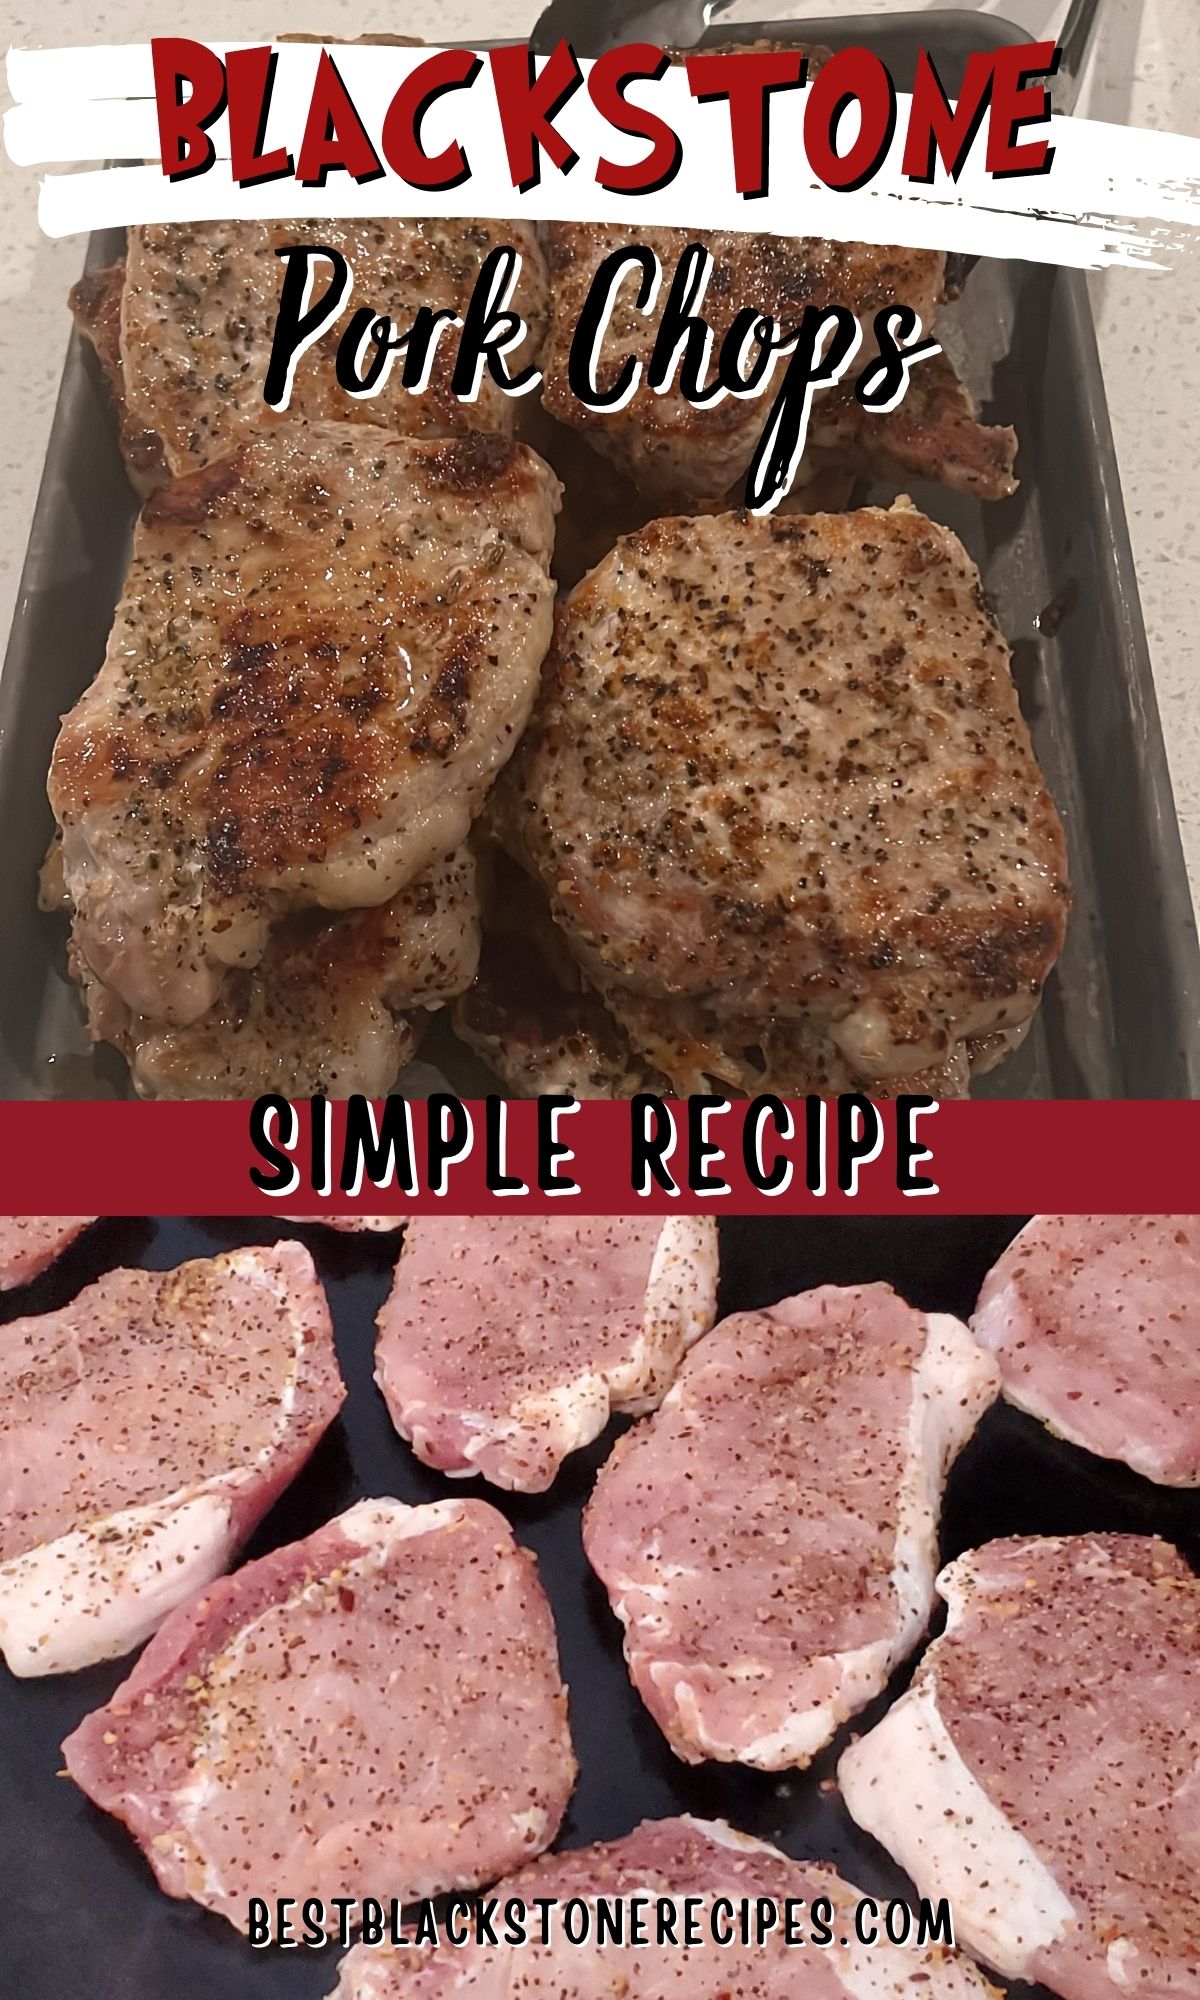 Blackstone pork chops: simple recipe guidance.